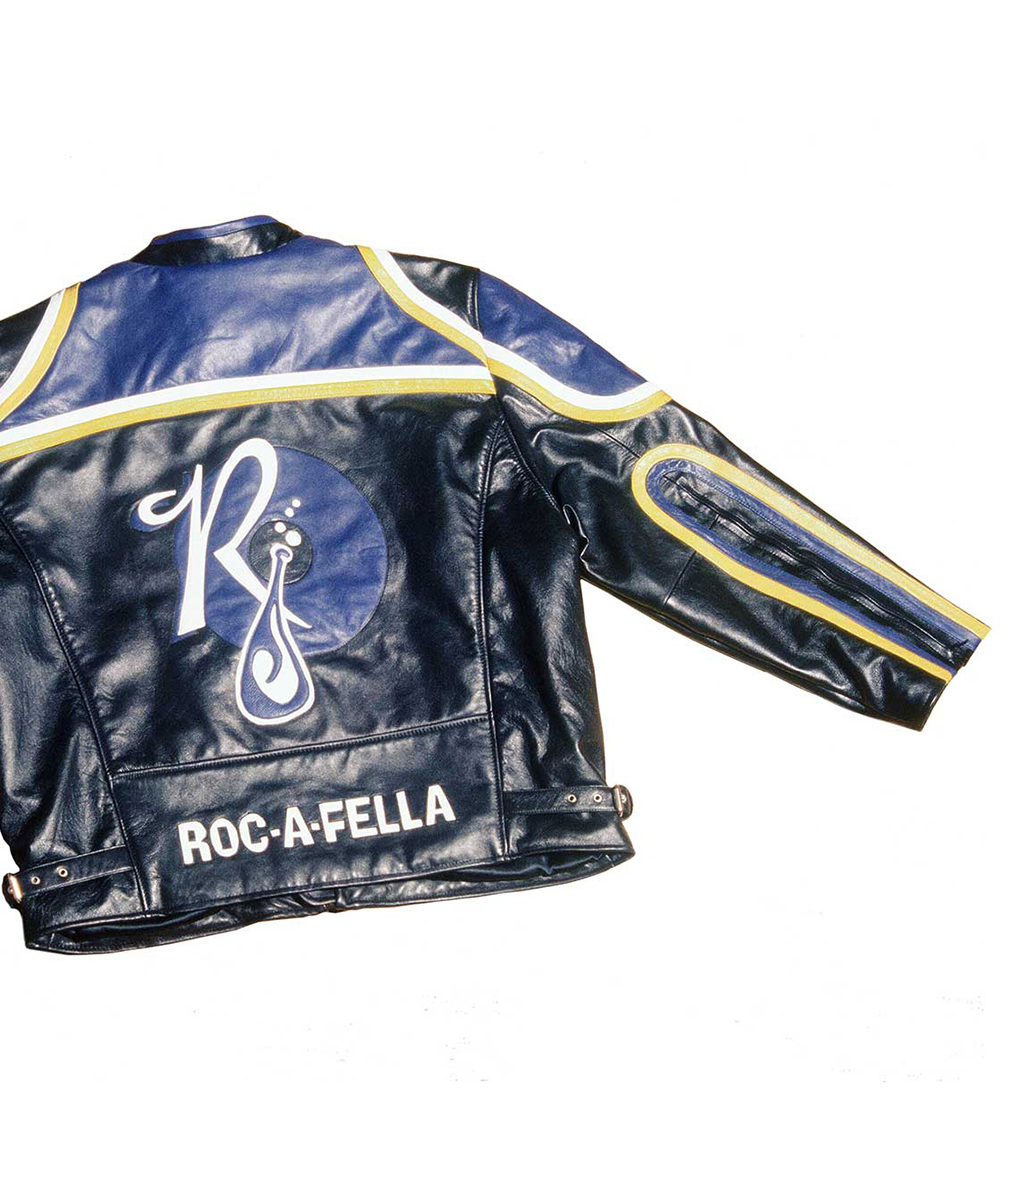 Jay Z Roc a Fella Records Leather Jacket